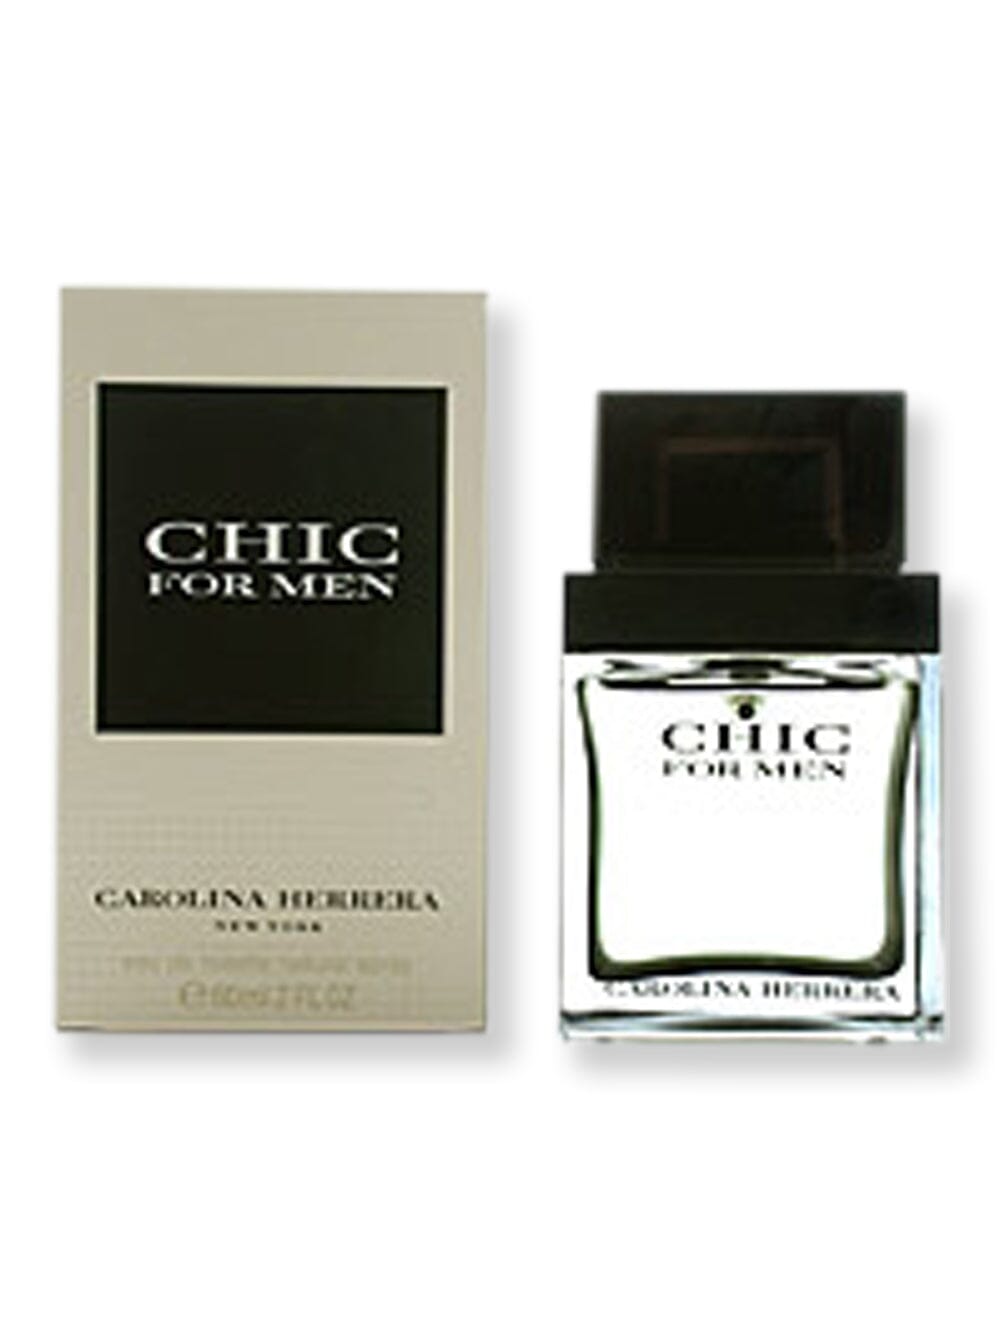 Carolina Herrera Carolina Herrera Chic For Men EDT Spray 2 oz60 ml Perfume 